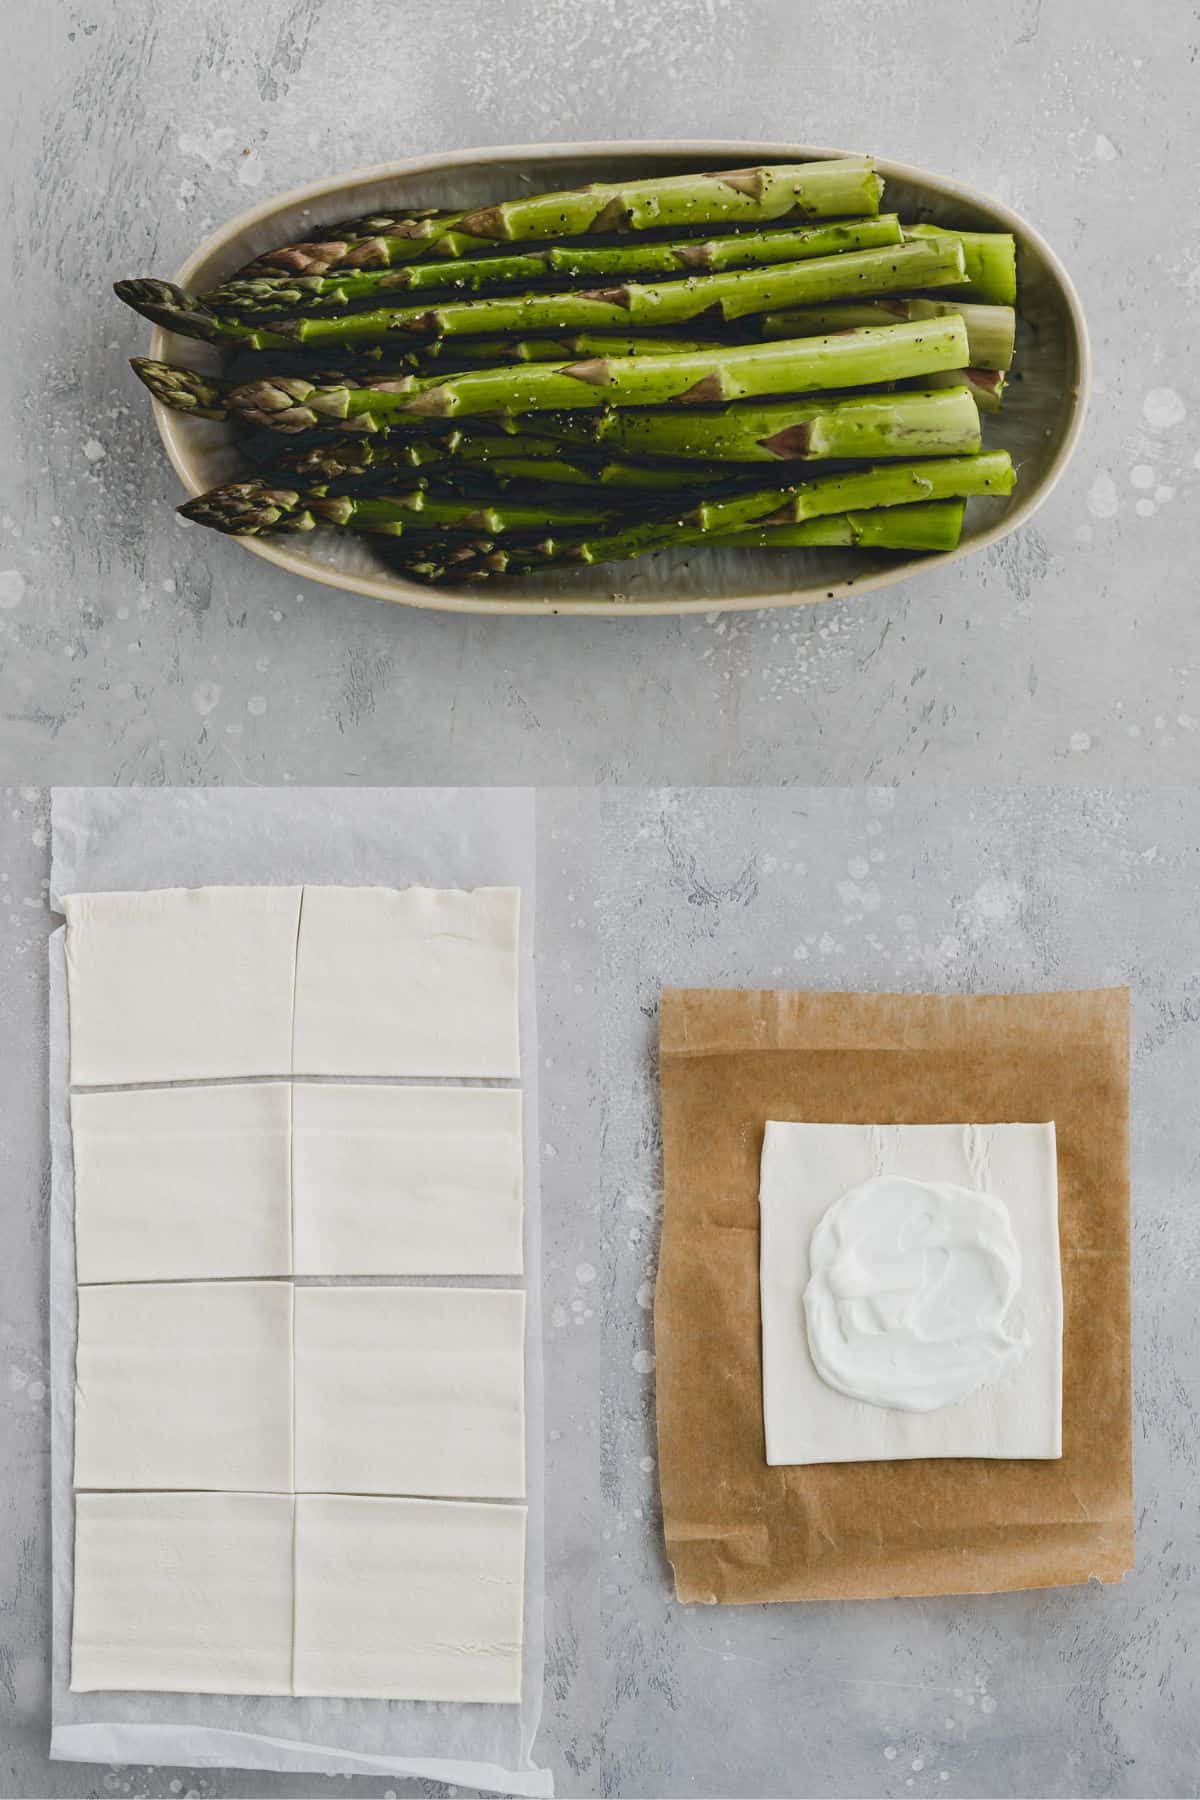 Asparagus Puff Pastry Bundles Recipe Step 1-3